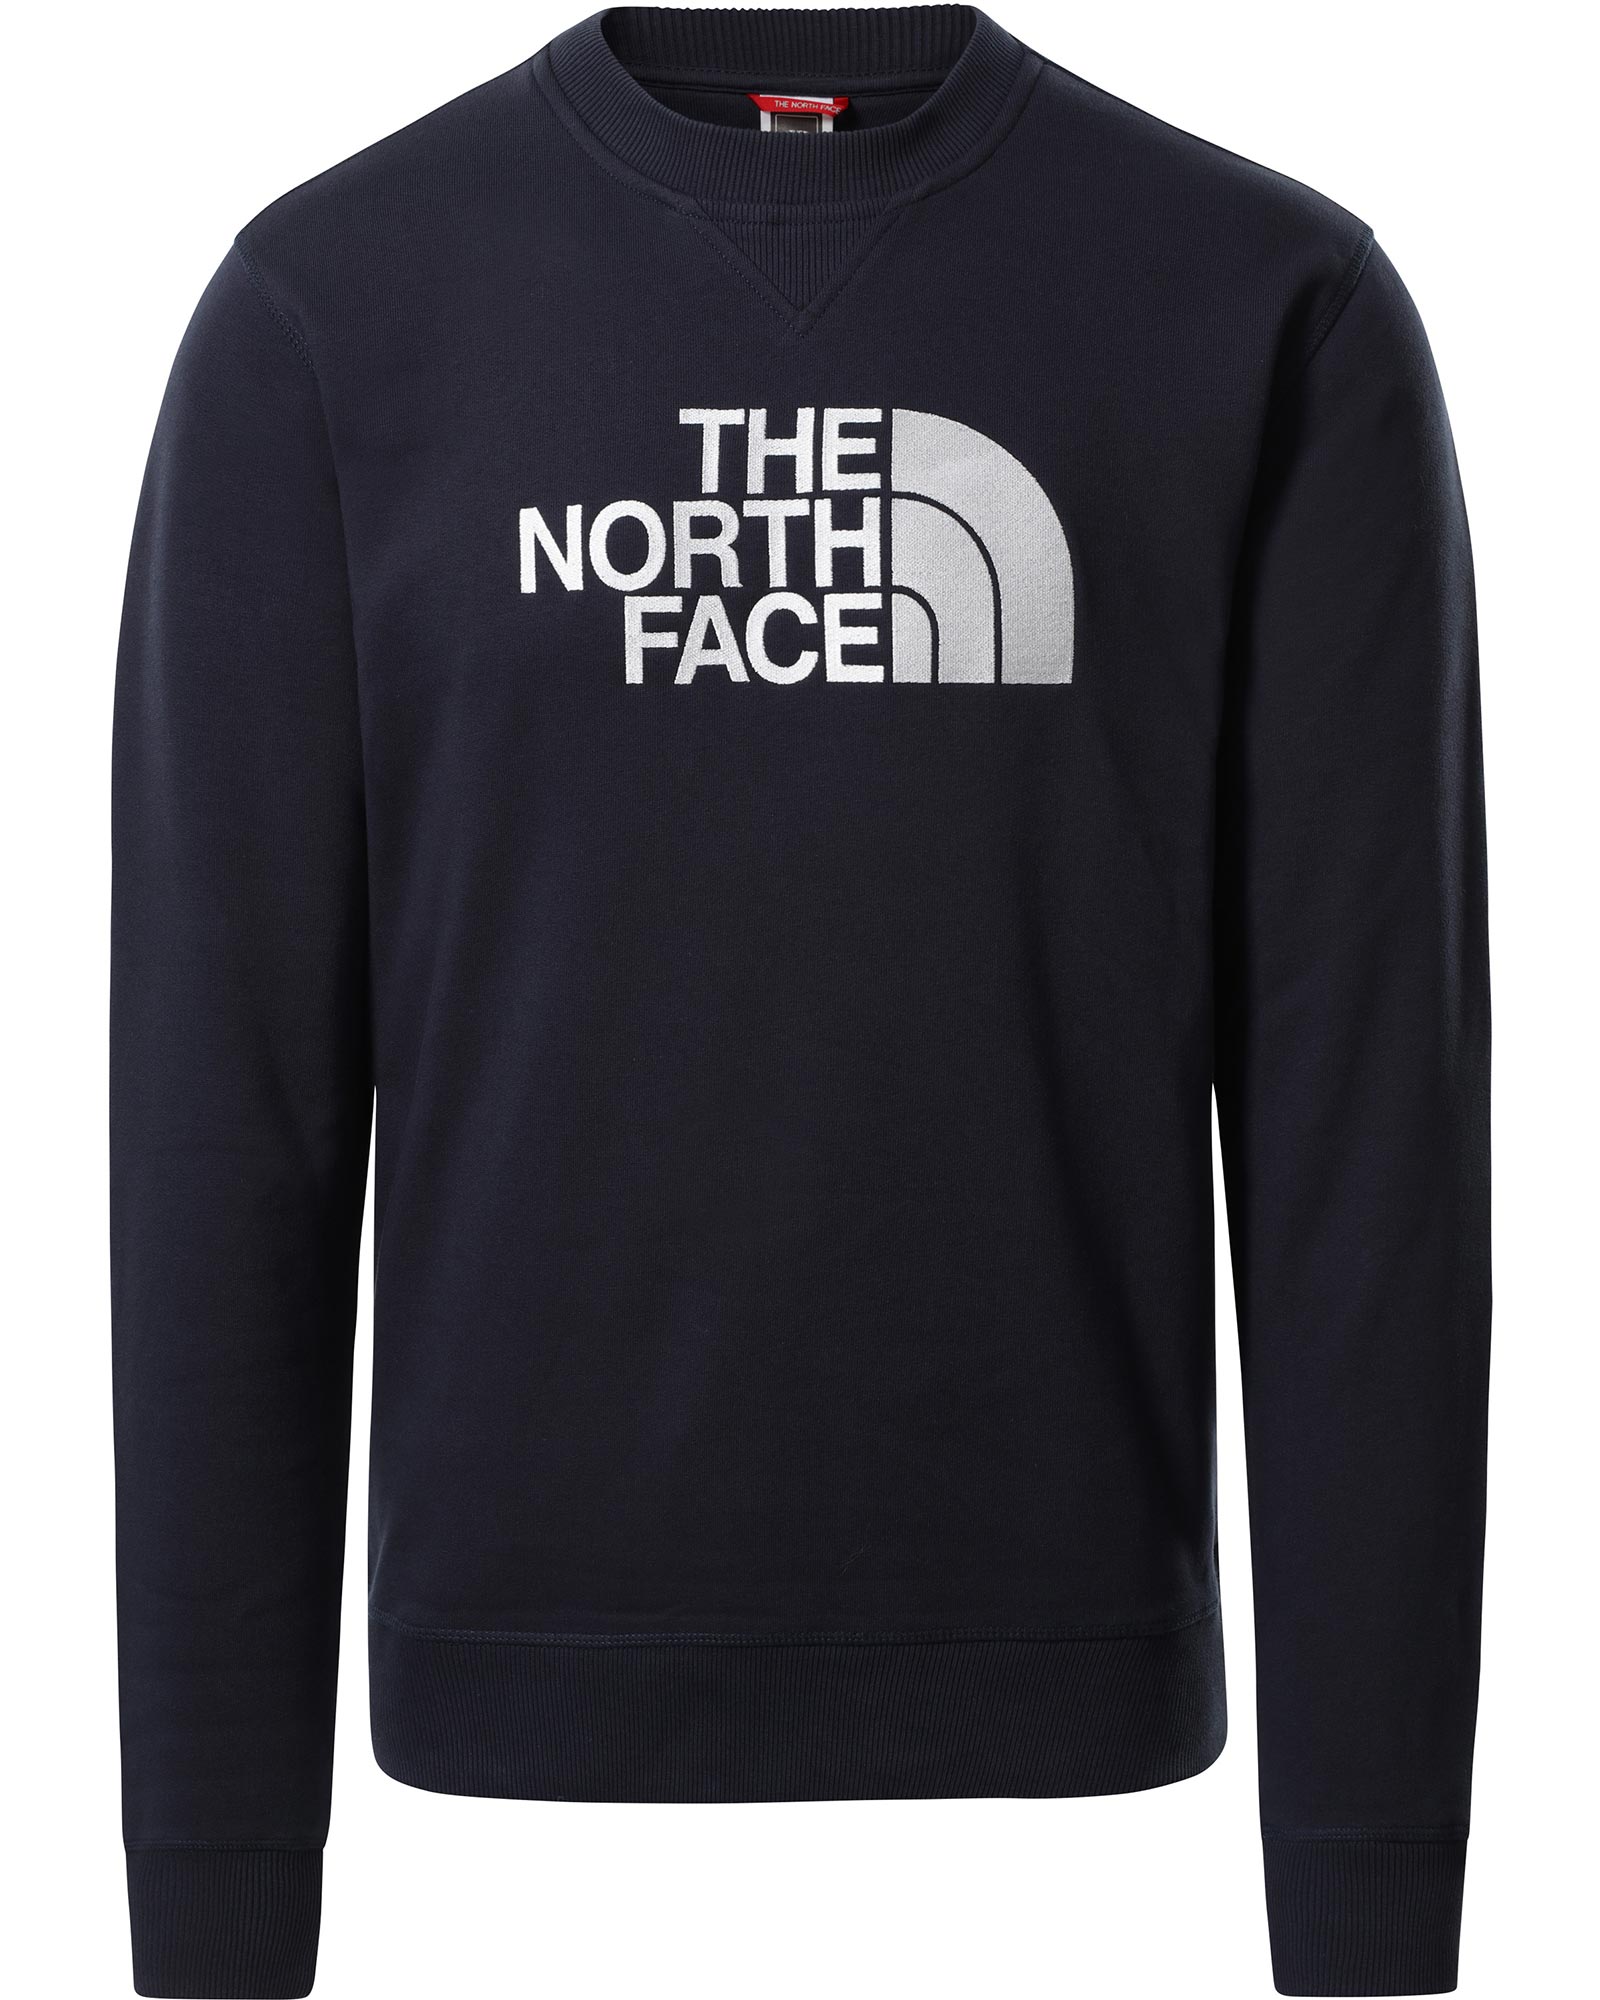 The North Face Drew Peak Men’s Crew - Urban Navy XS